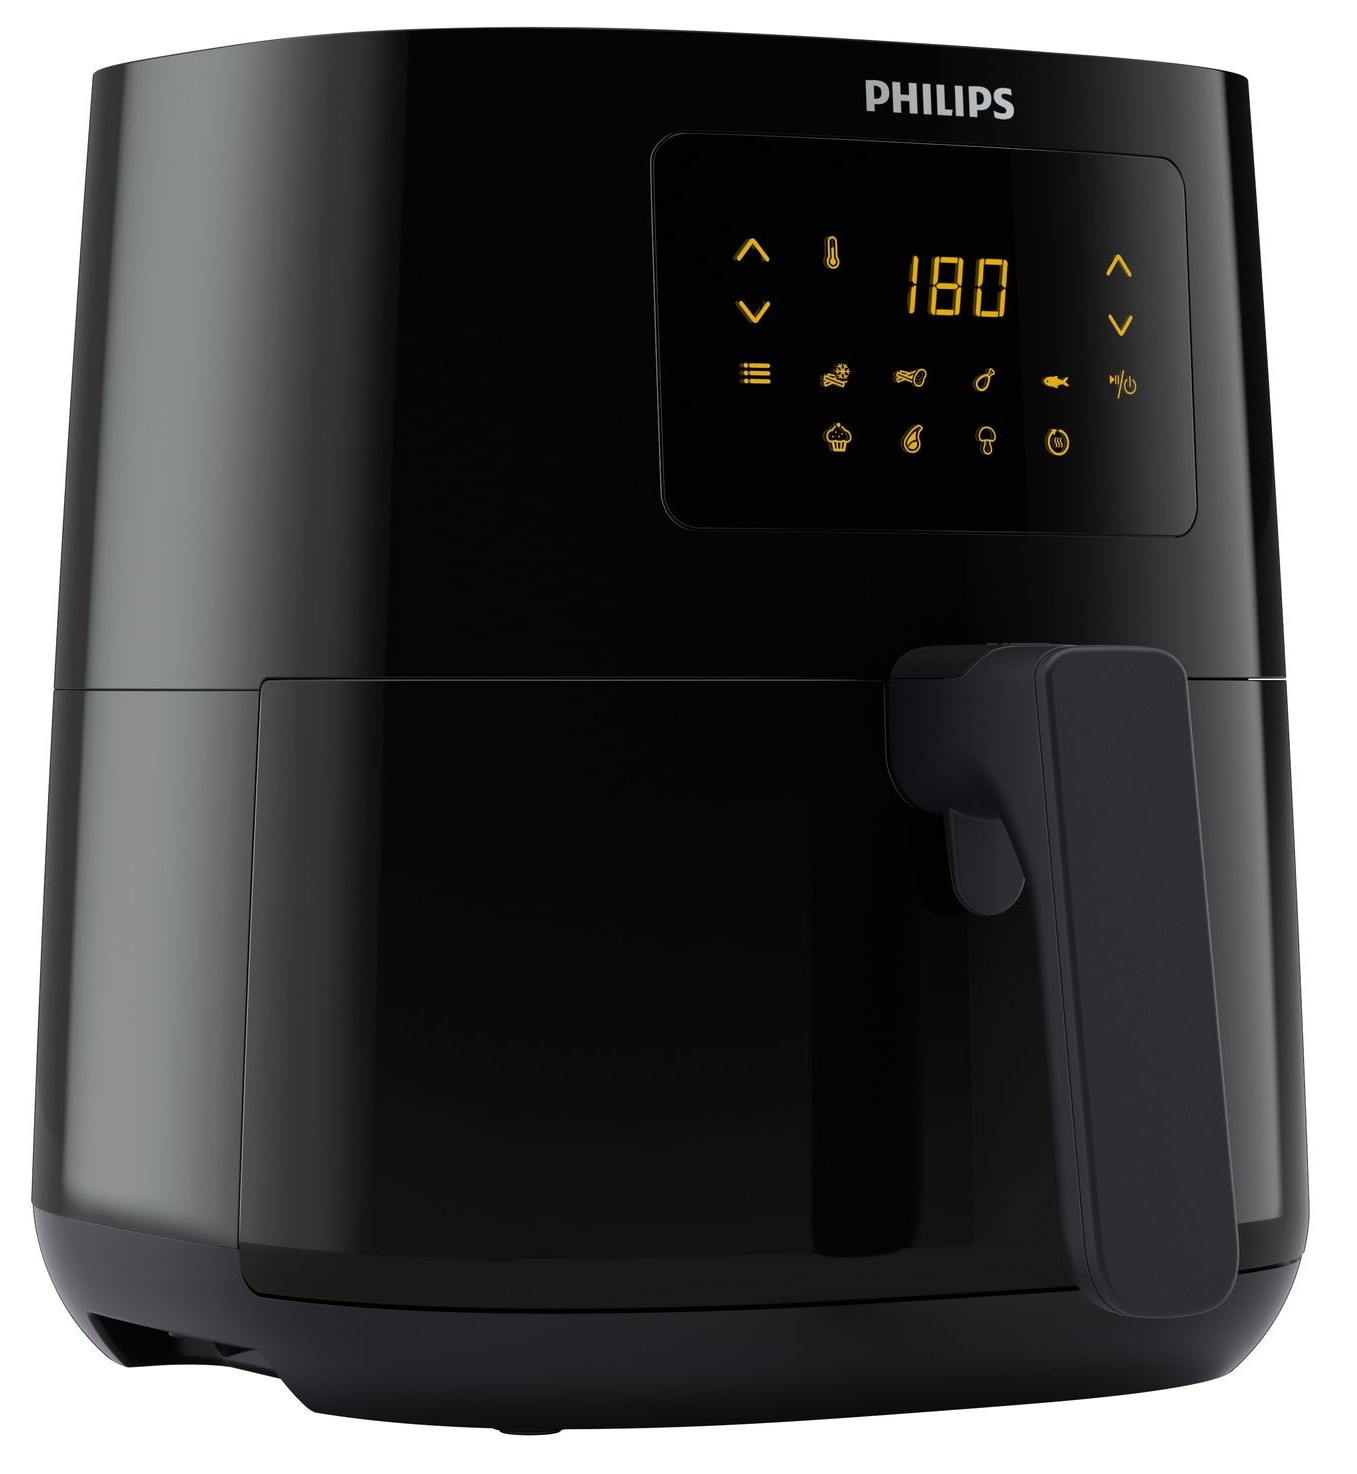 Мультипечь Philips HD9252/90 цена 5799.00 грн - фотография 2